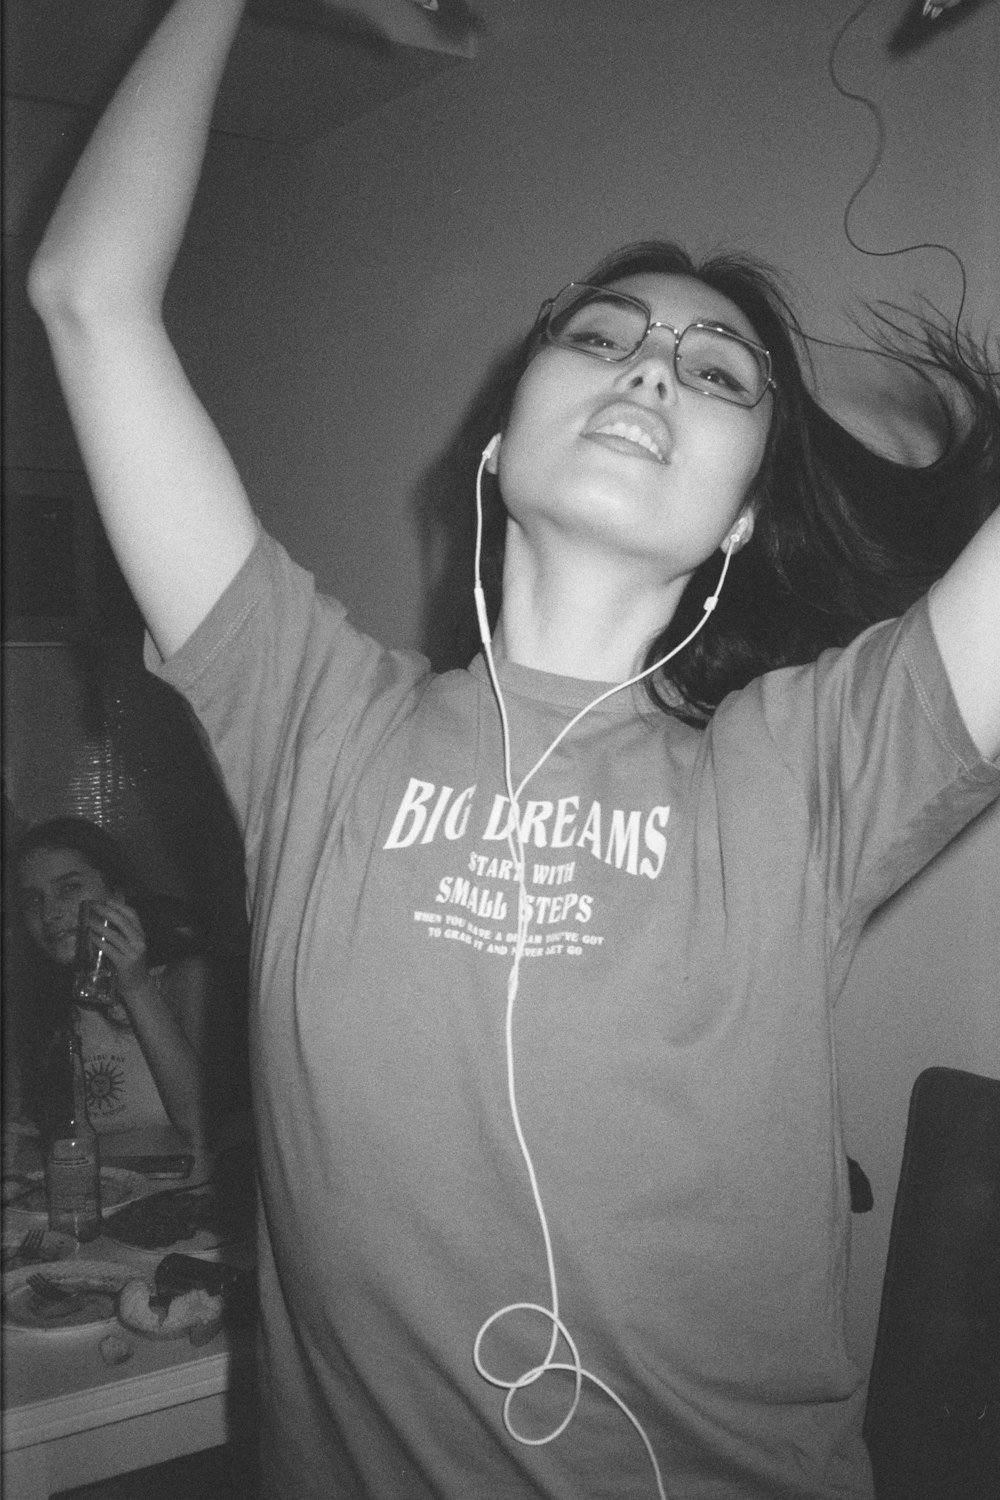 a woman wearing headphones and a big dreams t - shirt